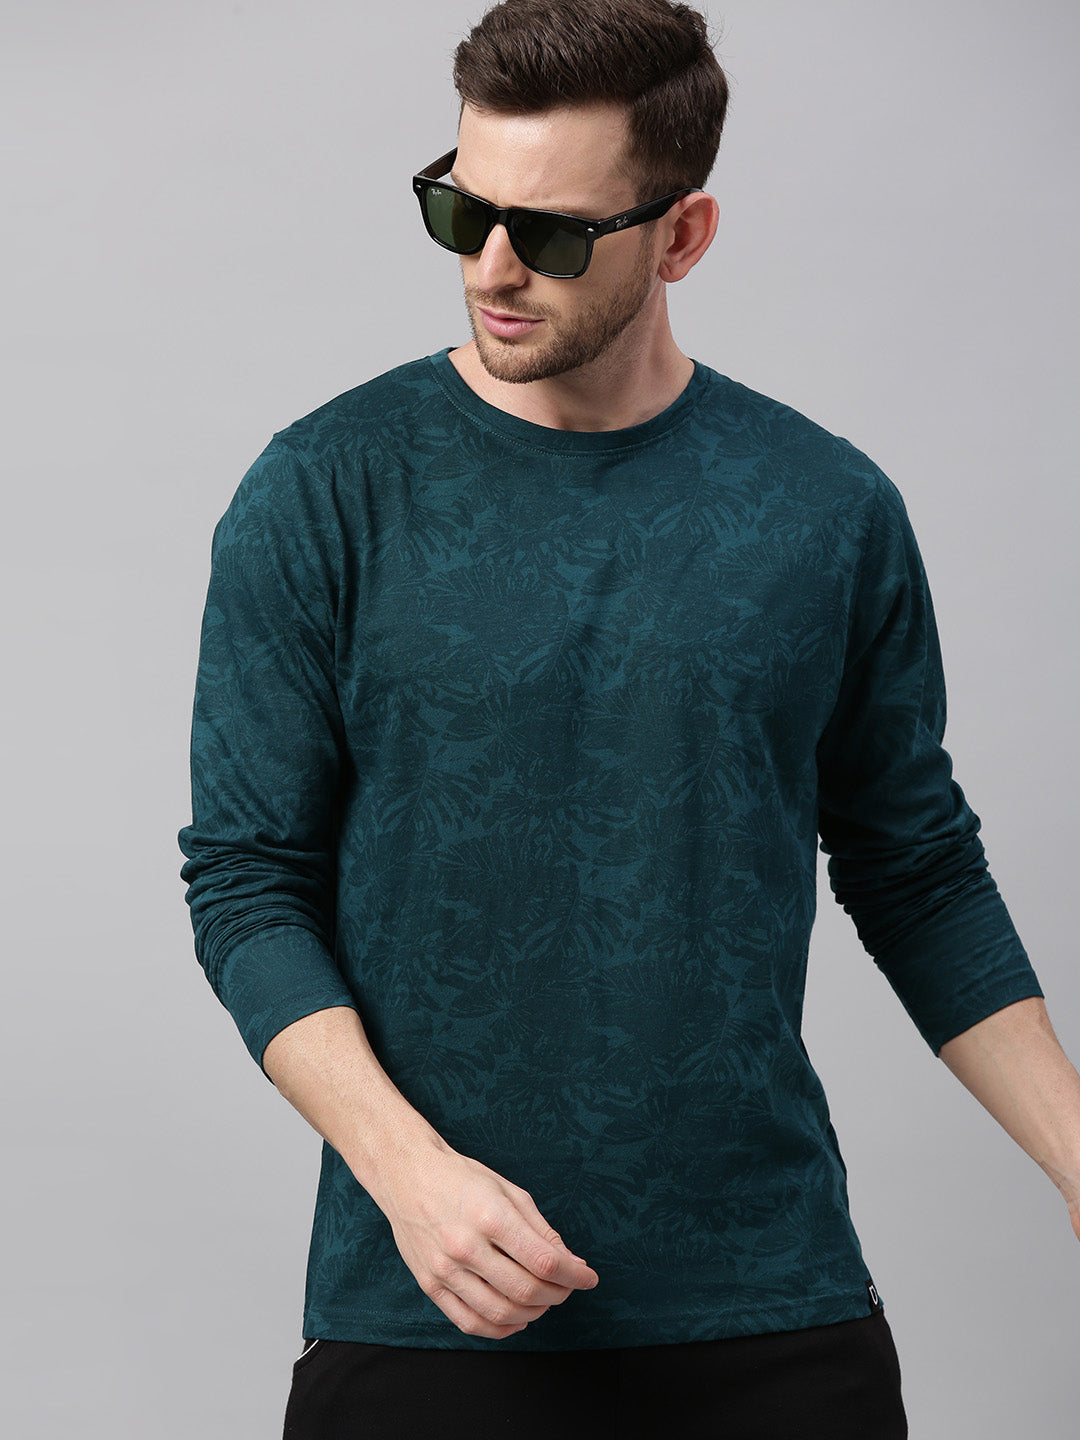 Men's Dark Green Printed Full Sleeve Slim Fit T-Shirt